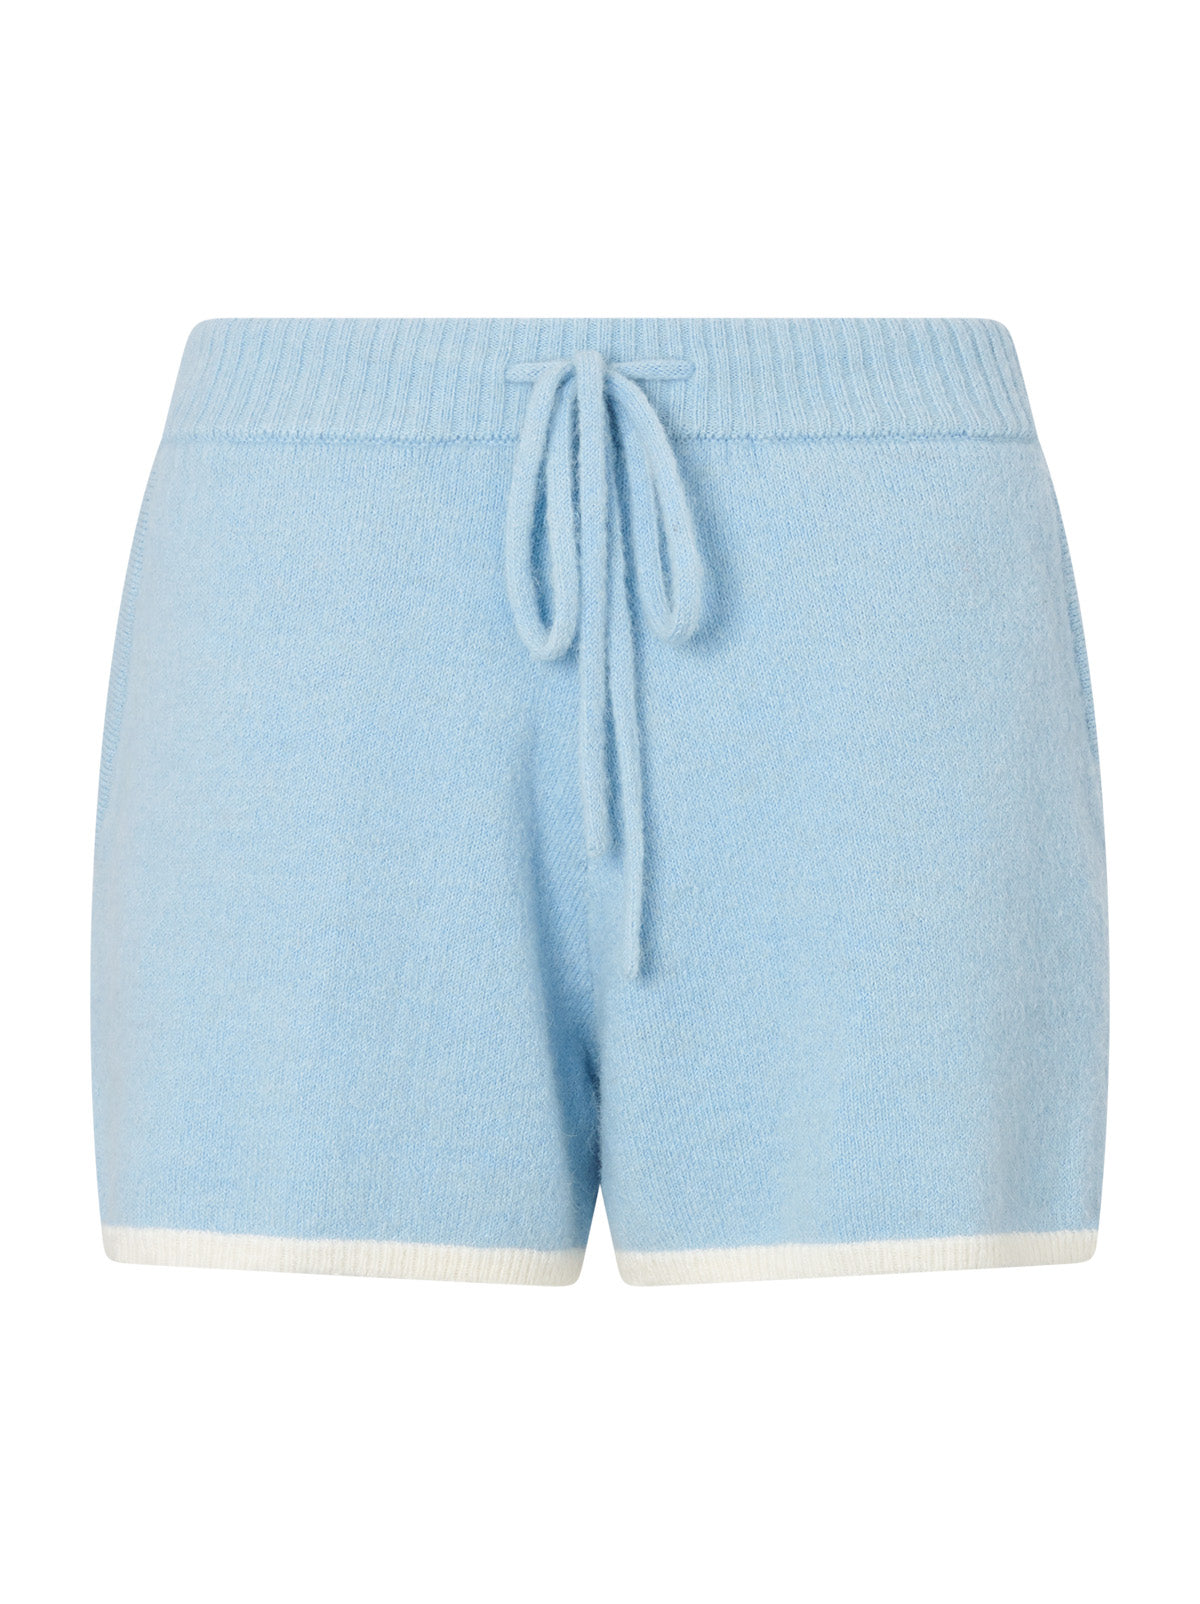 Harriet Blue Alpaca Blend Shorts by KITRI Studio